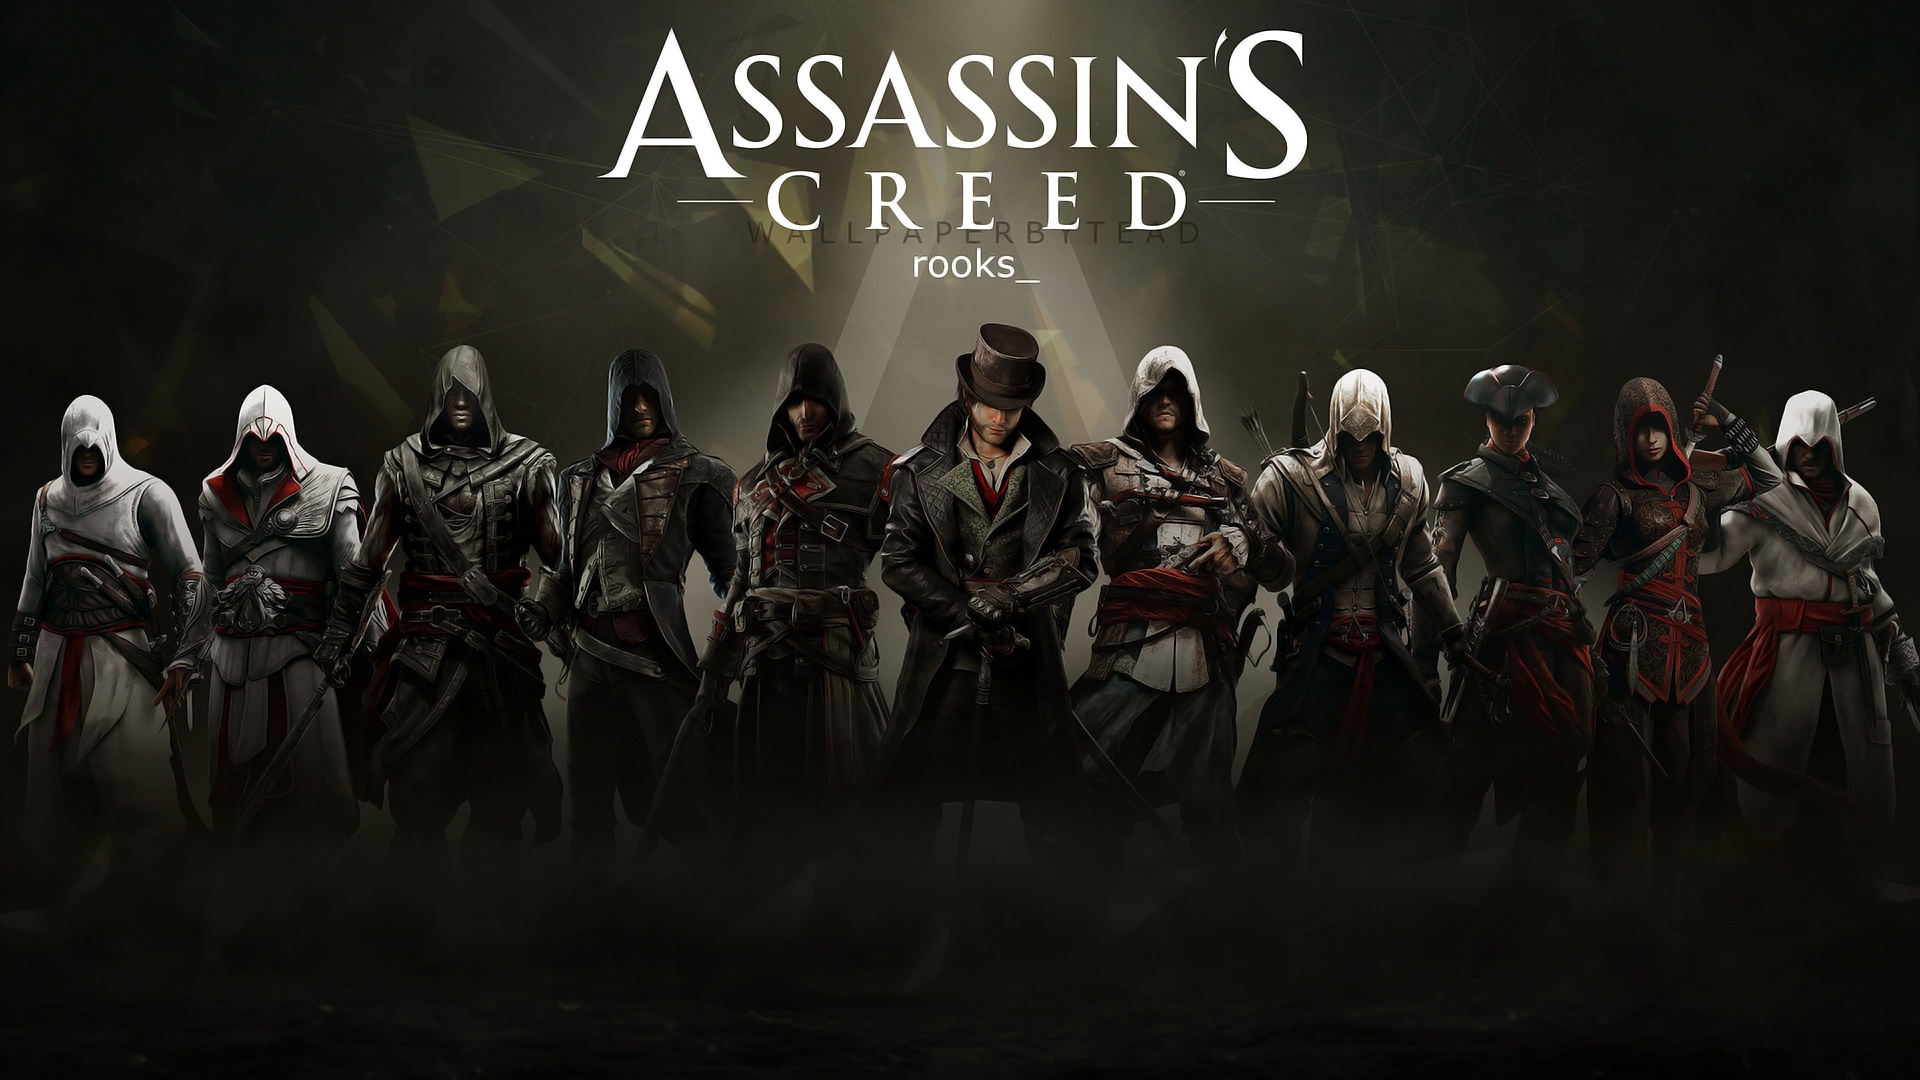 Assassins Creed Assassins Altair Ibn LaAhad Ezio Auditore Da Firenze Edward Kenway Connor Kenway Arn 1920x1080